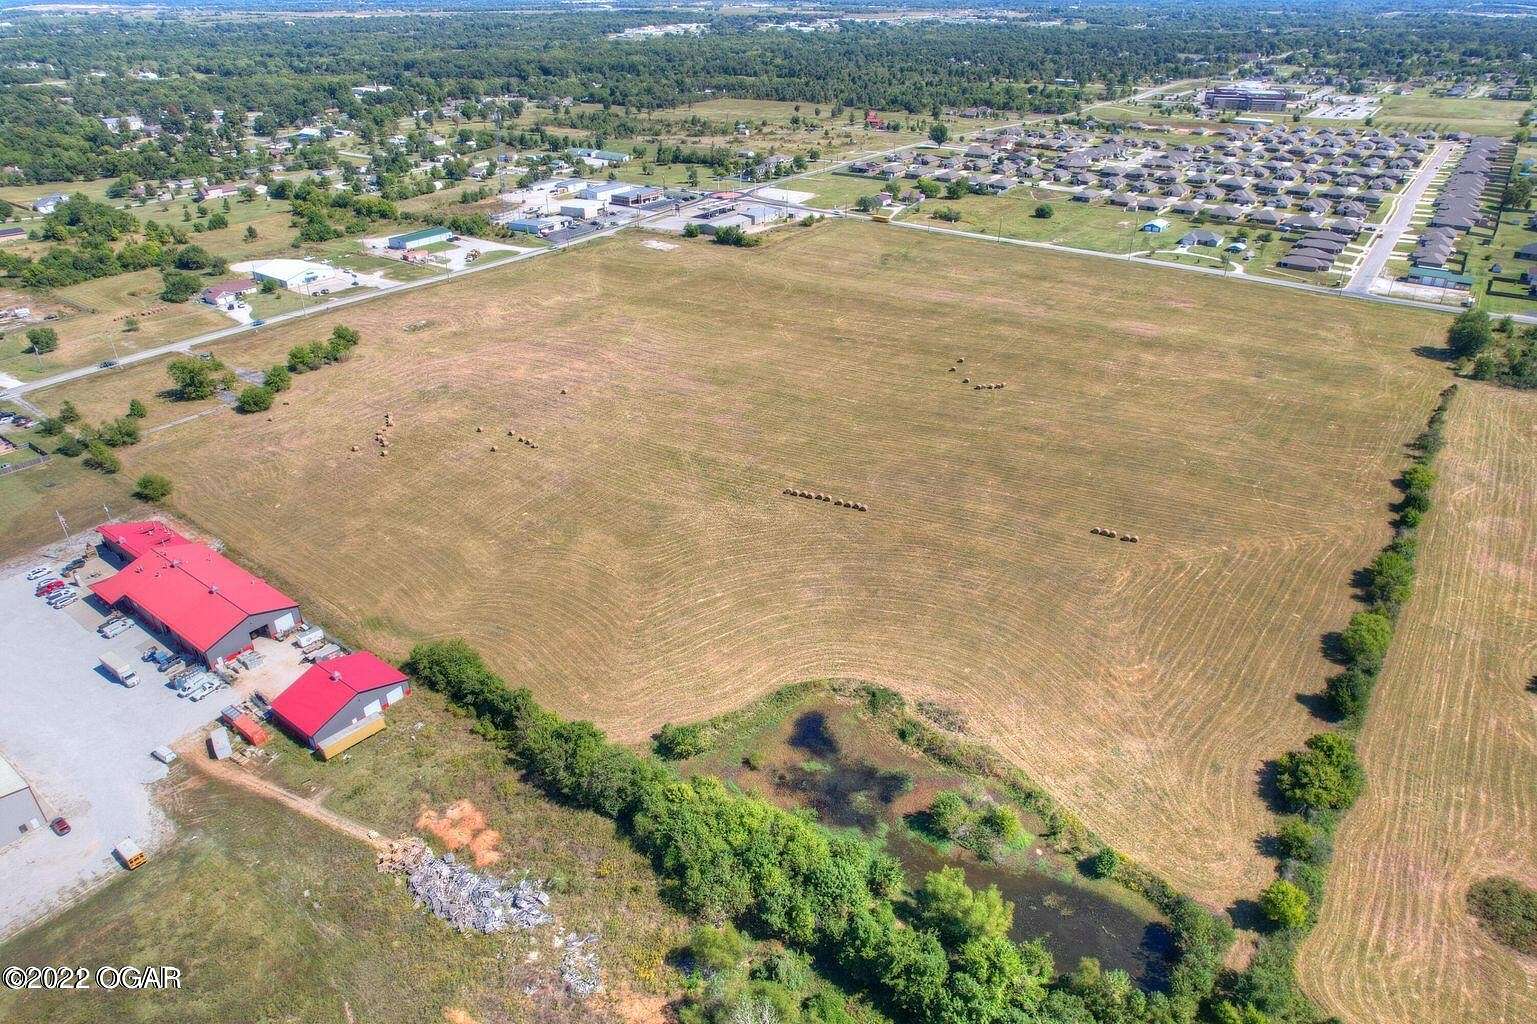 37 Acres of Land for Sale in Joplin, Missouri